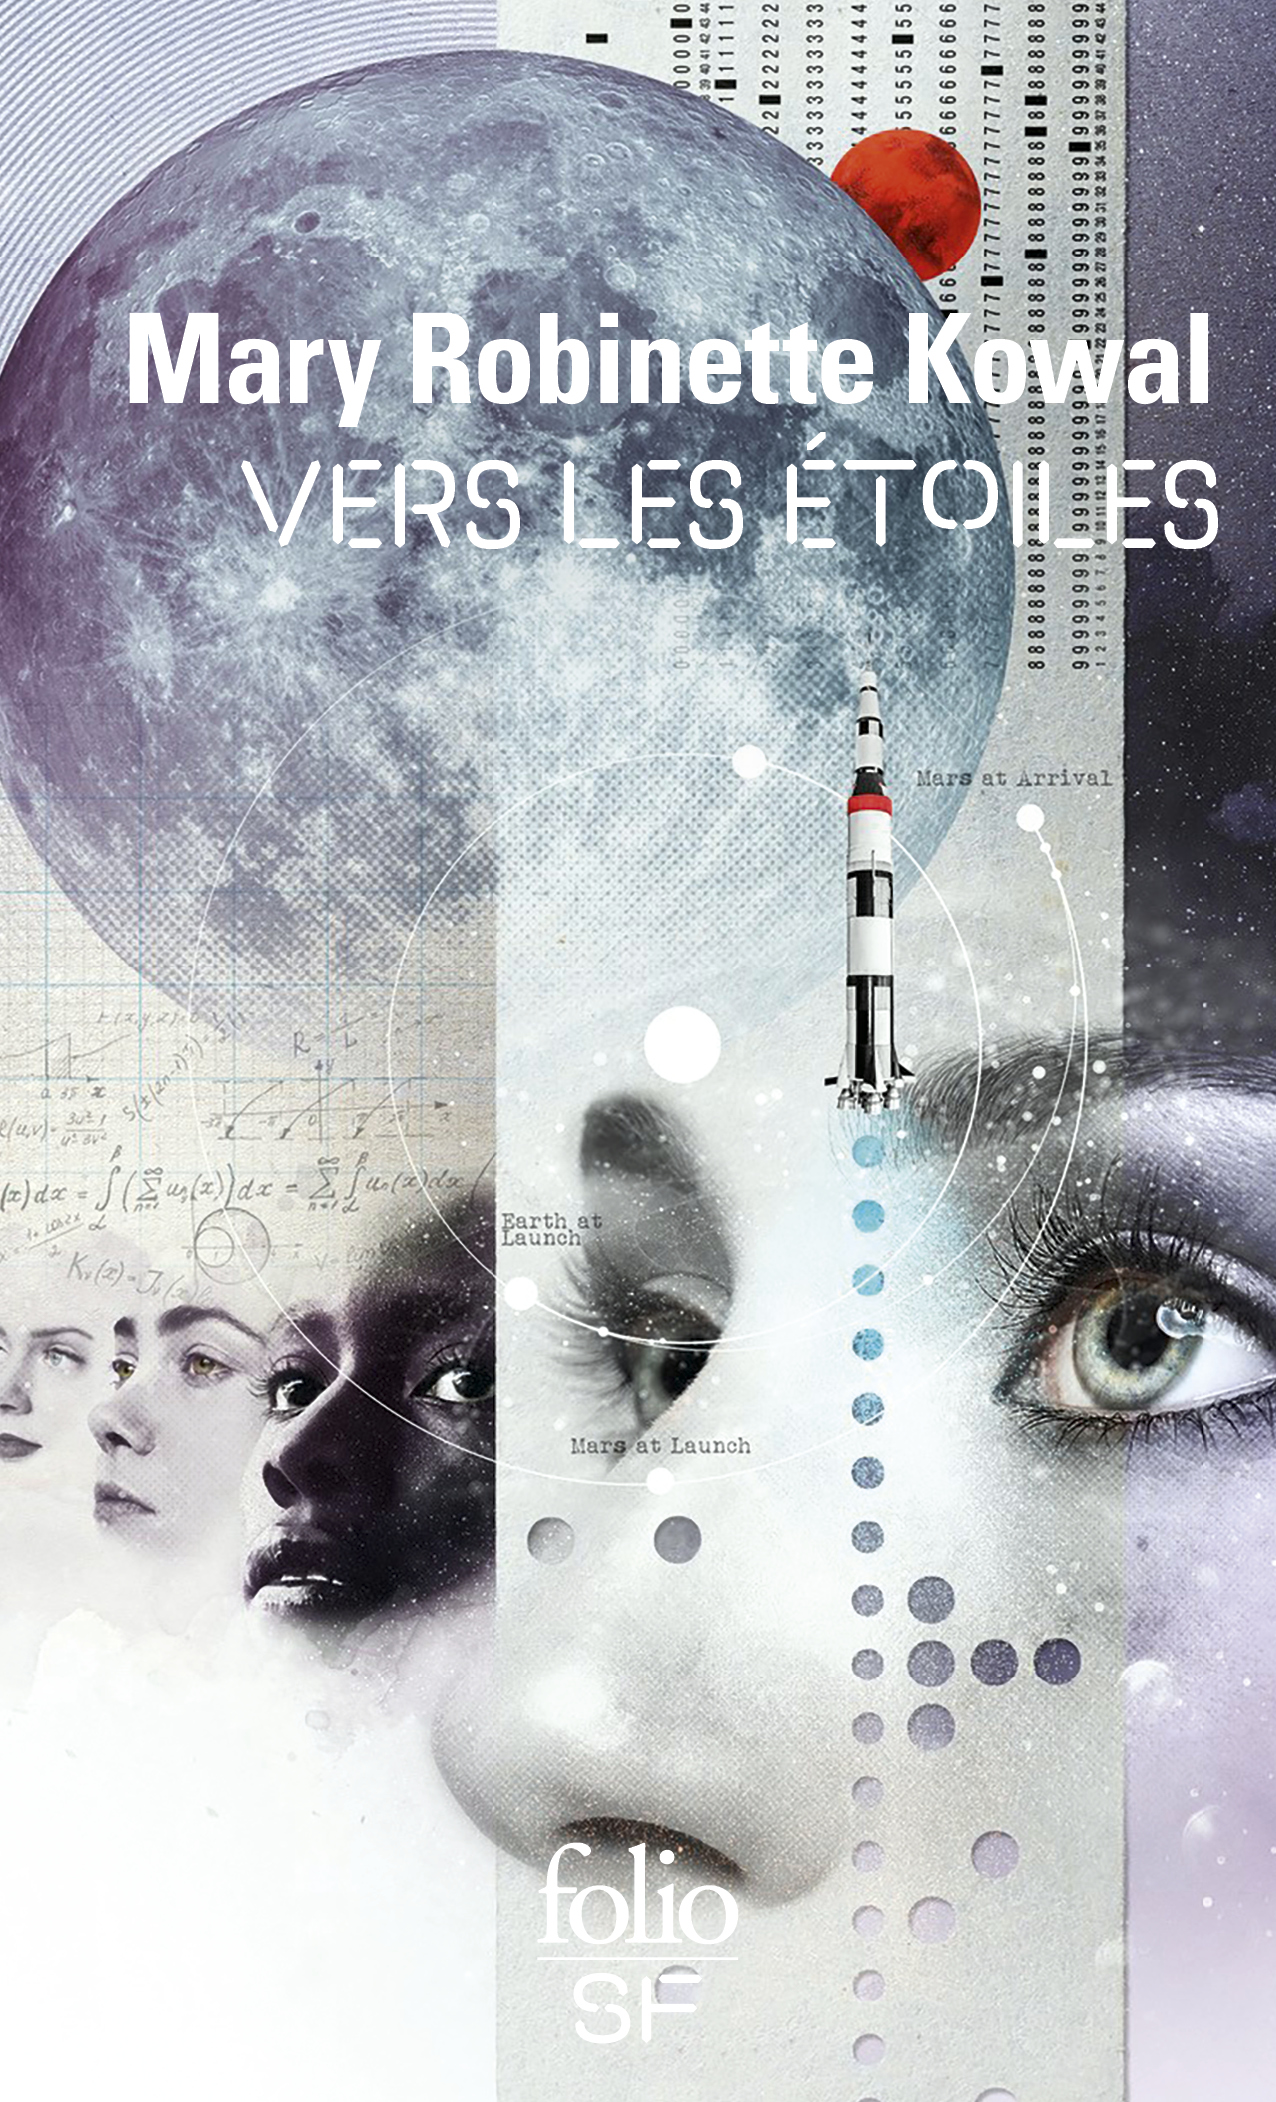 Vers les étoiles (French language, 2022, Folio)